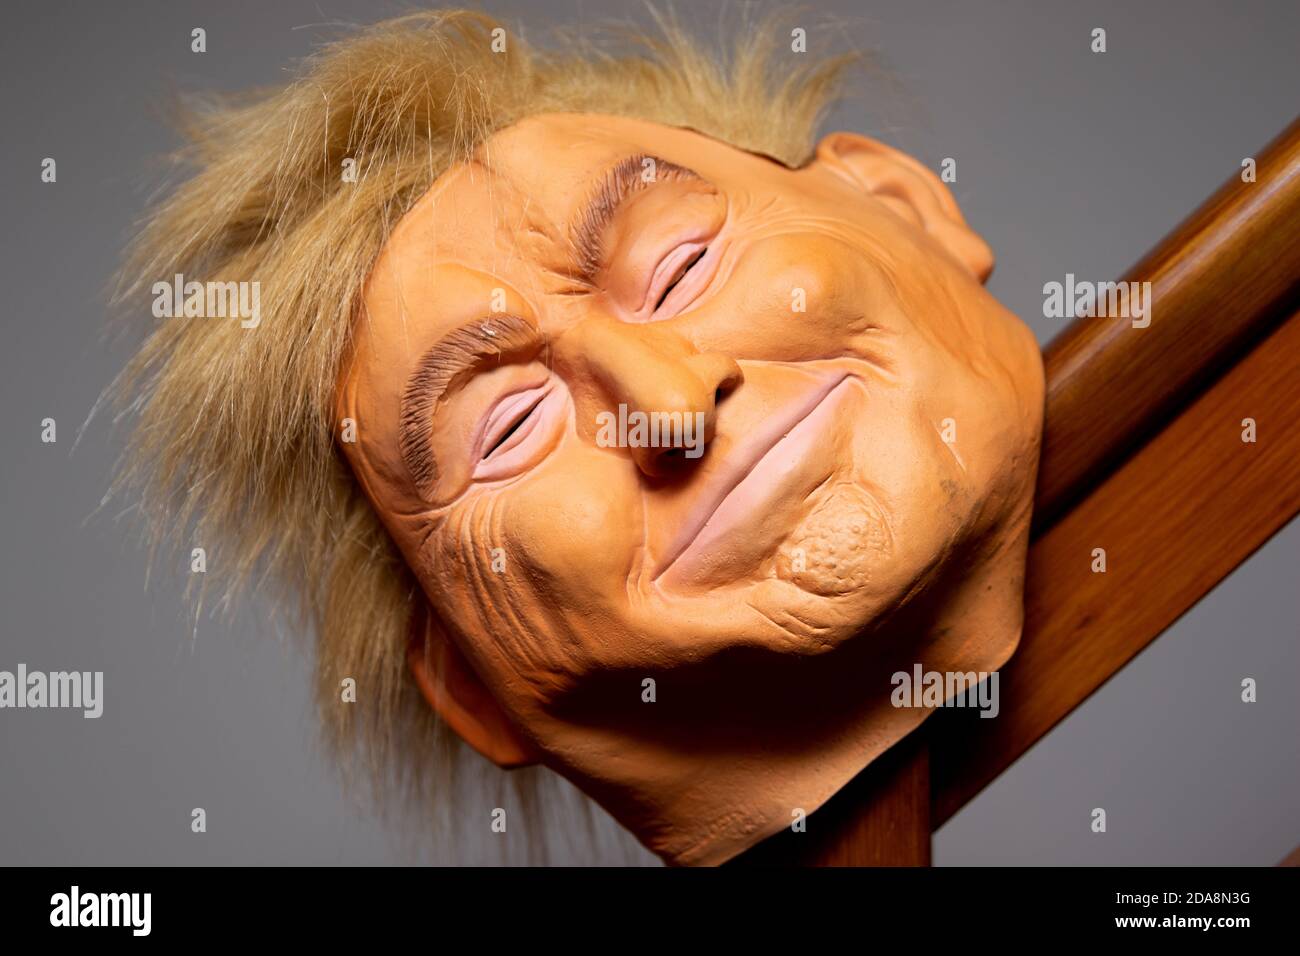 A Donald Trump costume mask Stock Photo